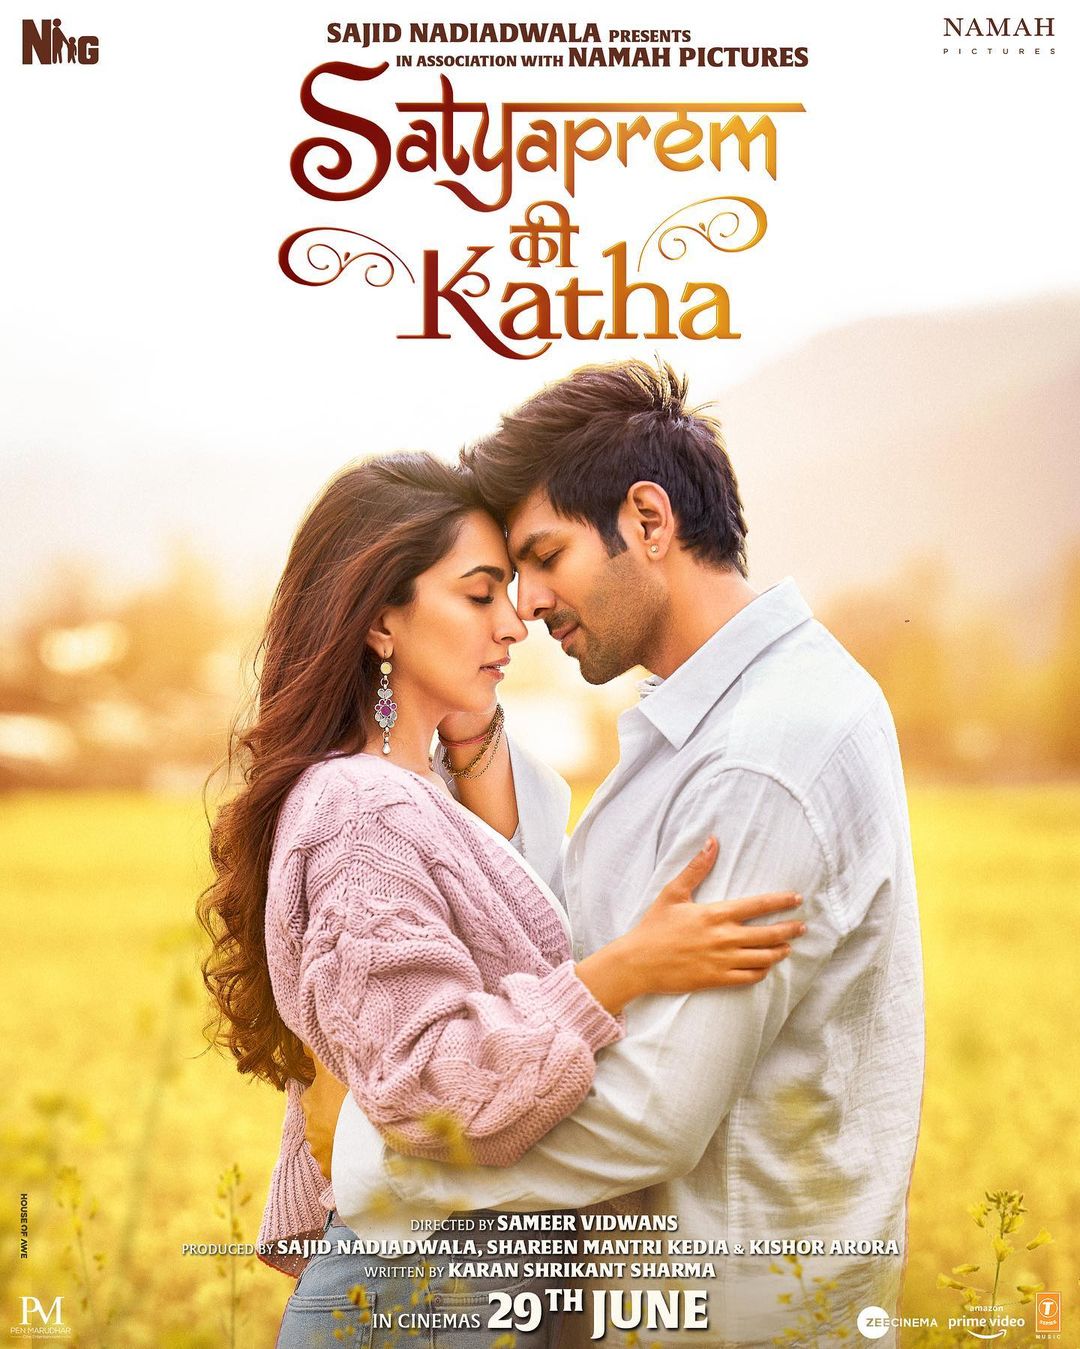 SatyaPrem-ki-katha-movie-poster